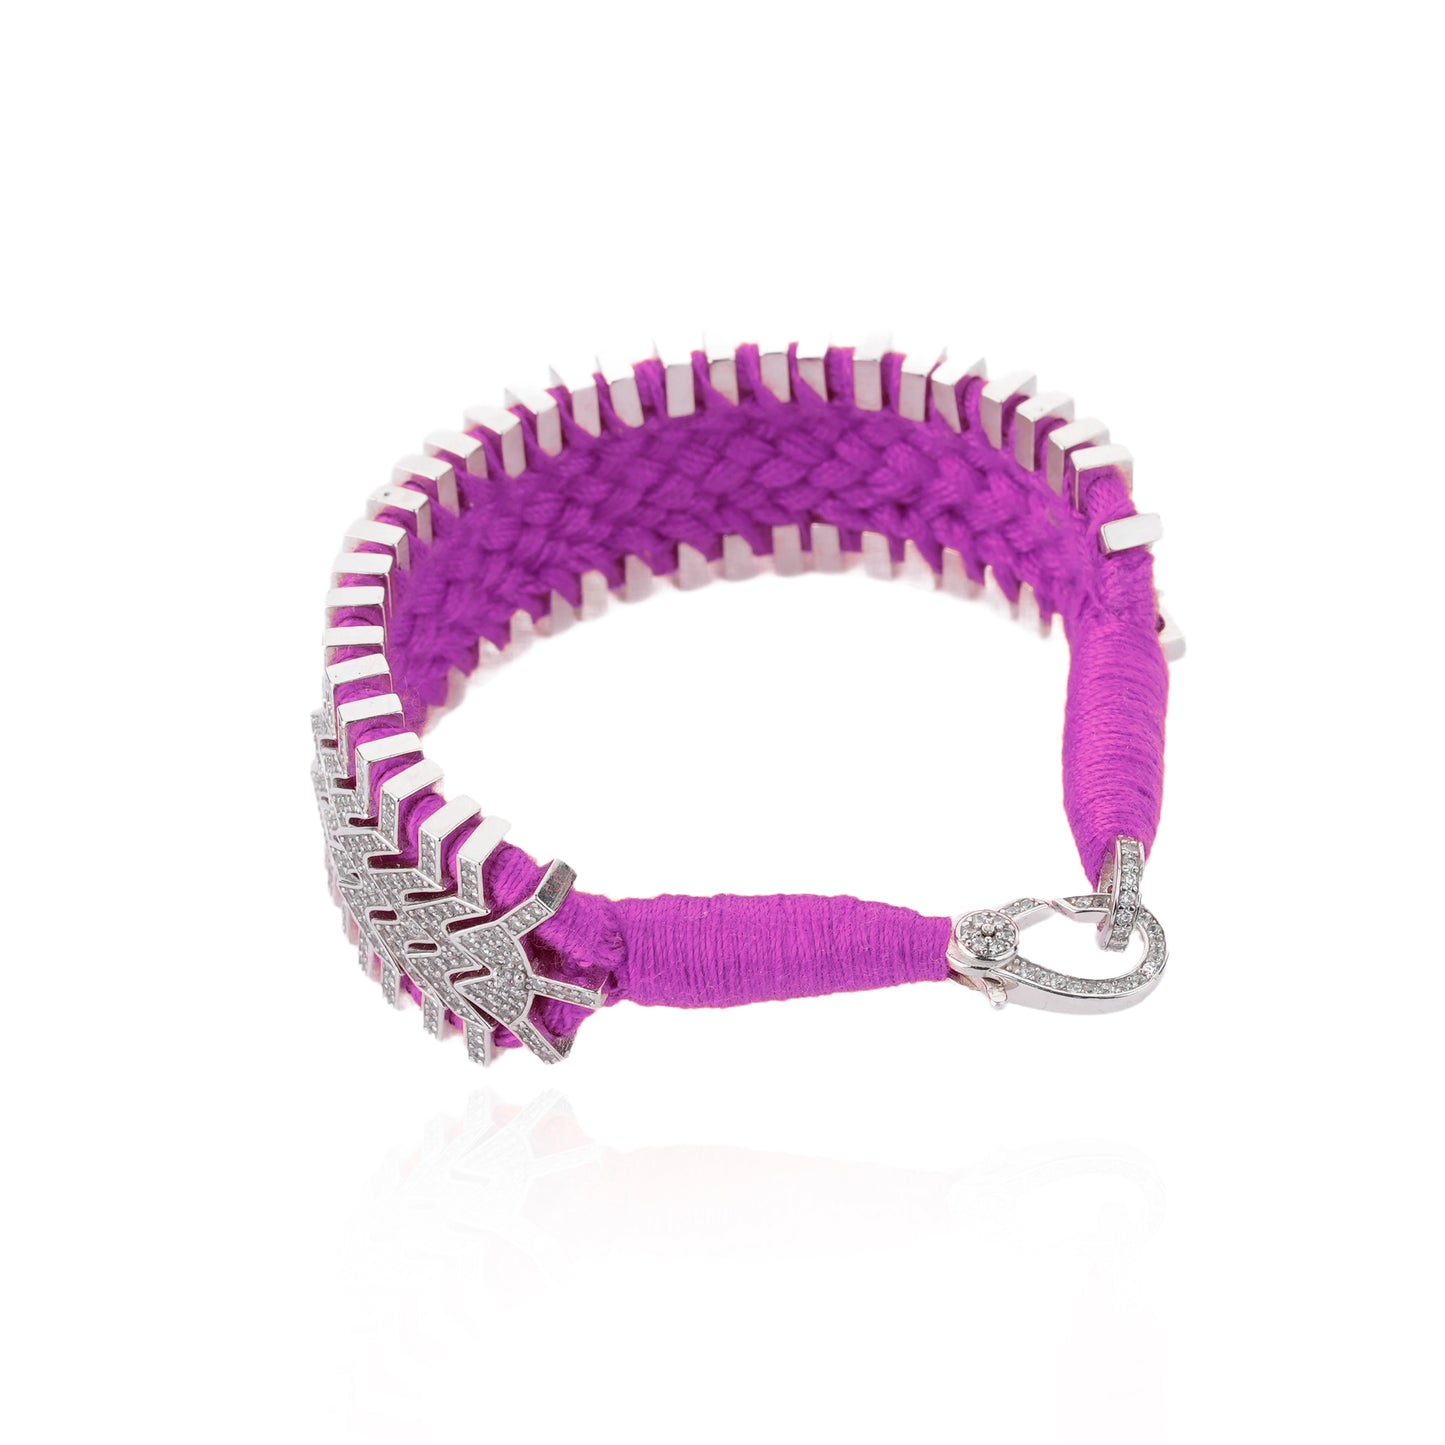 Bracelet Trancoso violet